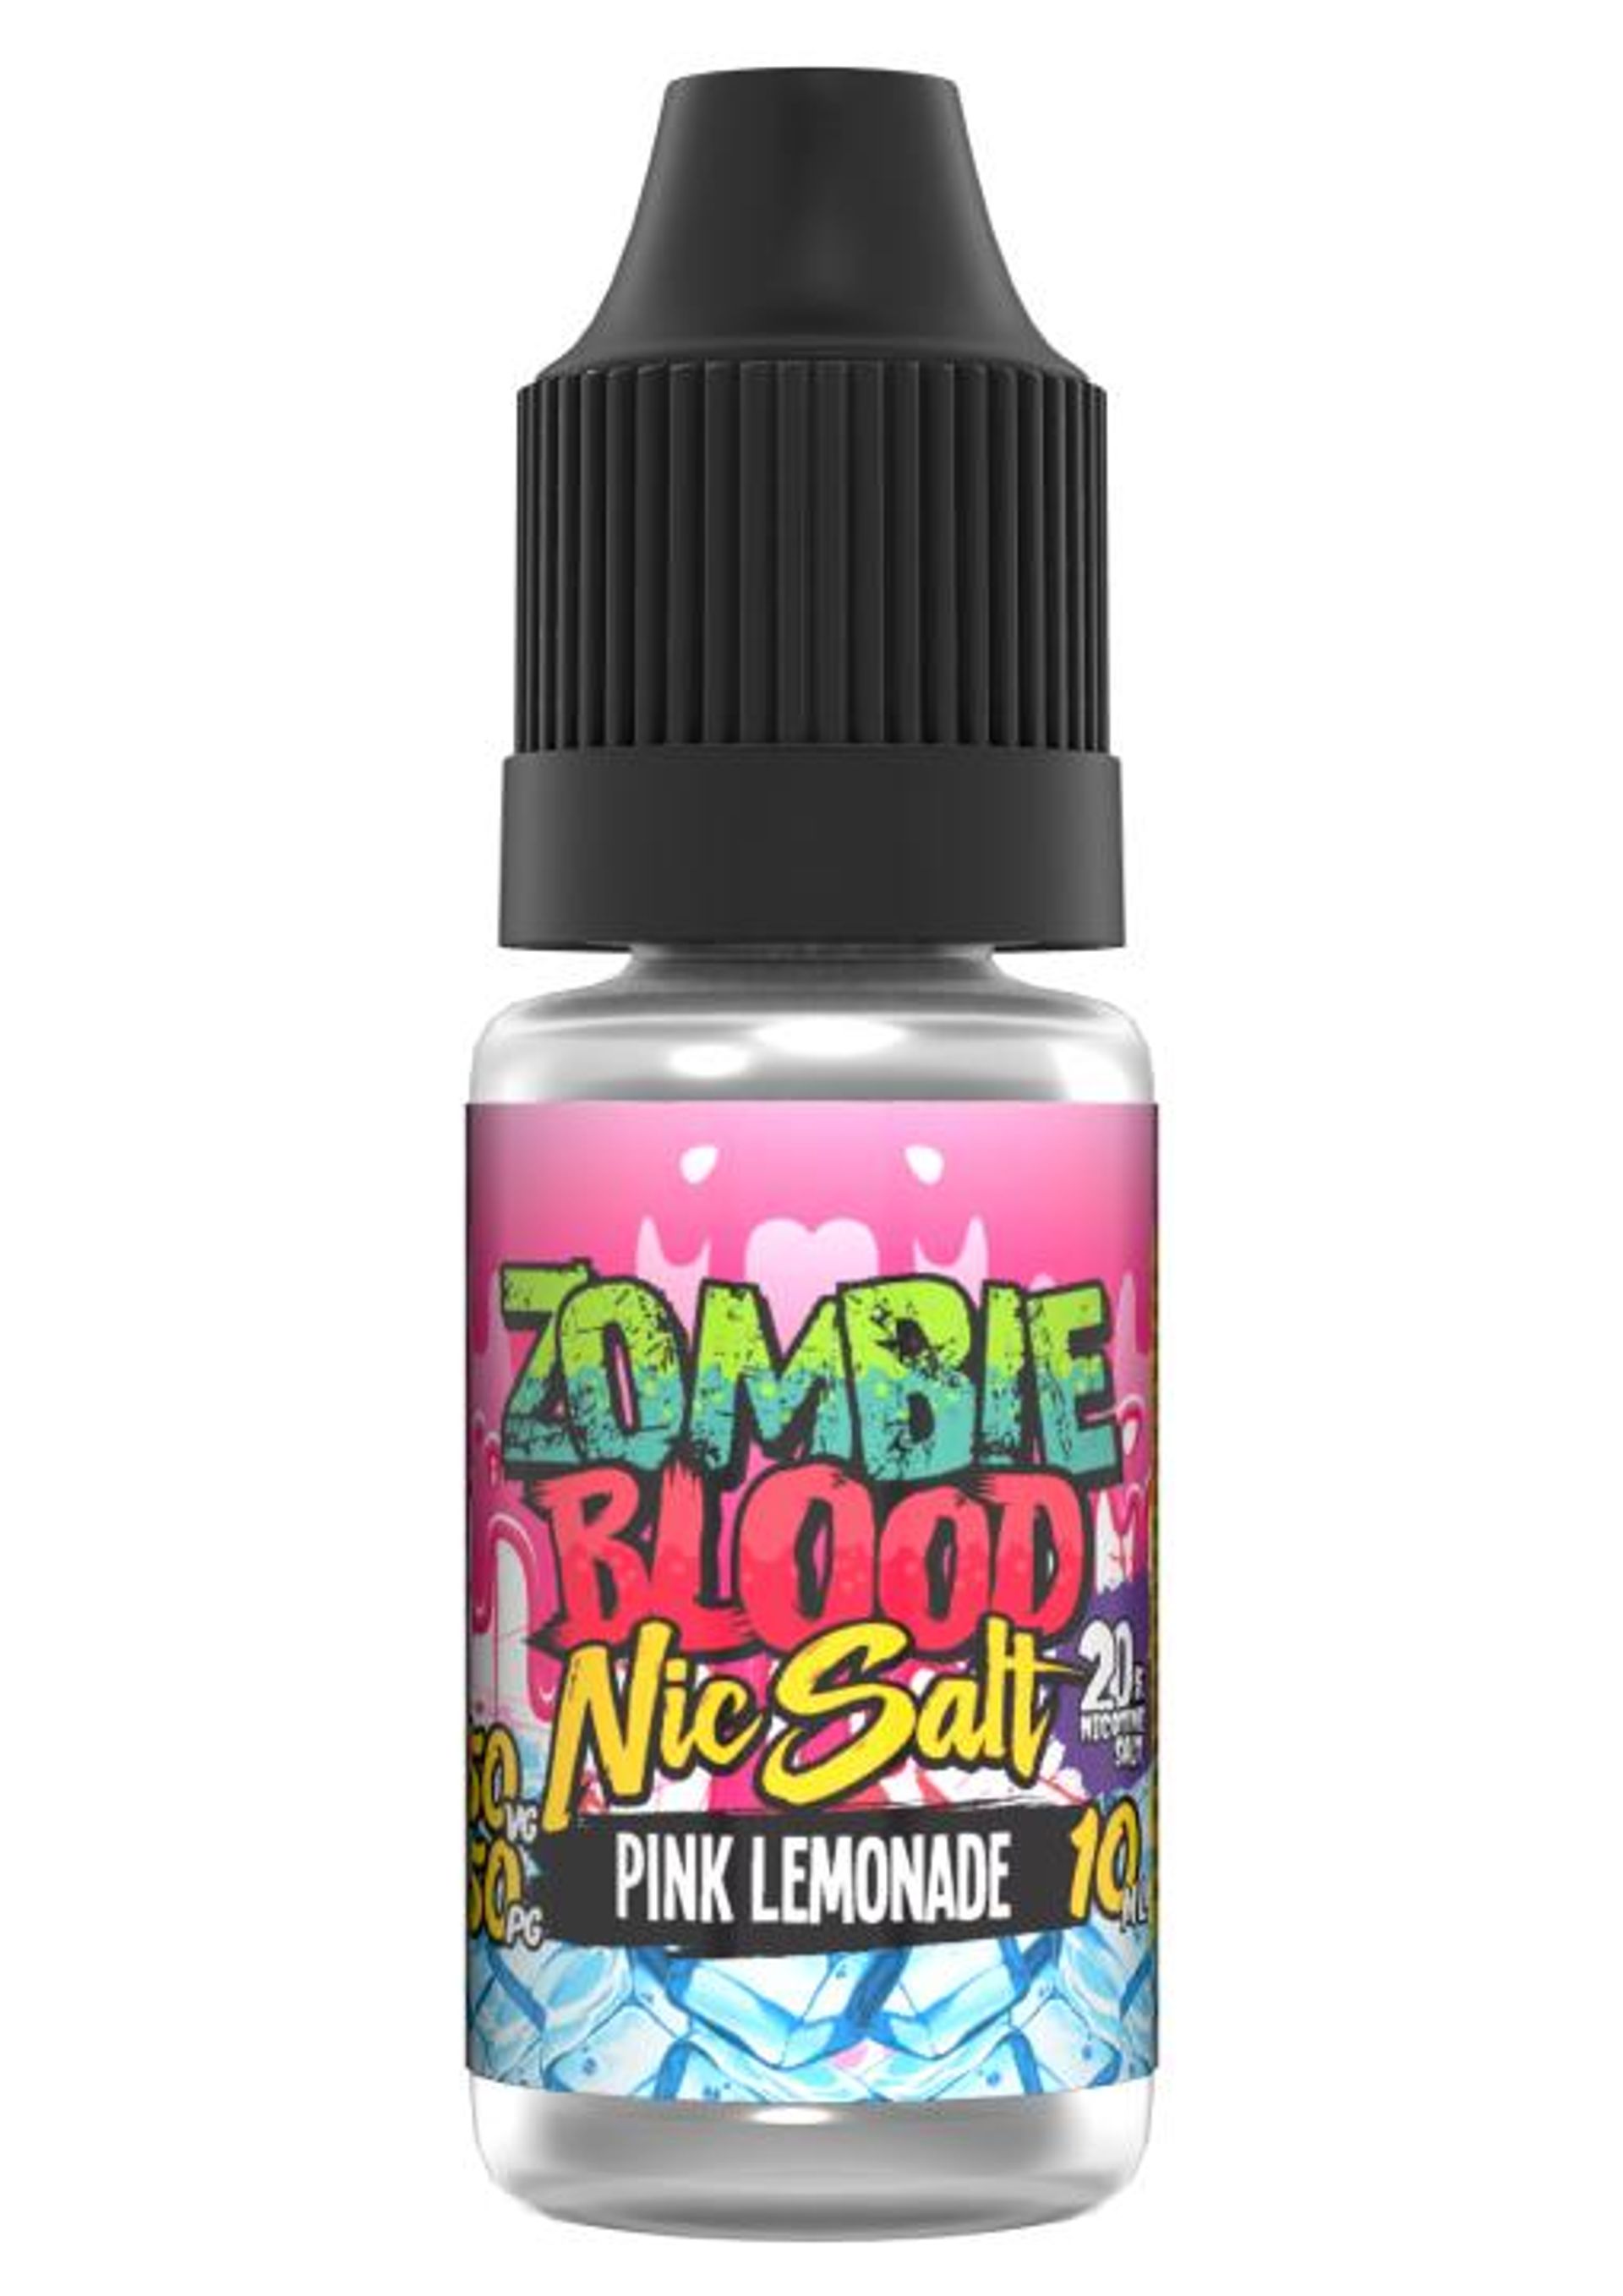 Image of Pink Lemonade by Zombie Blood